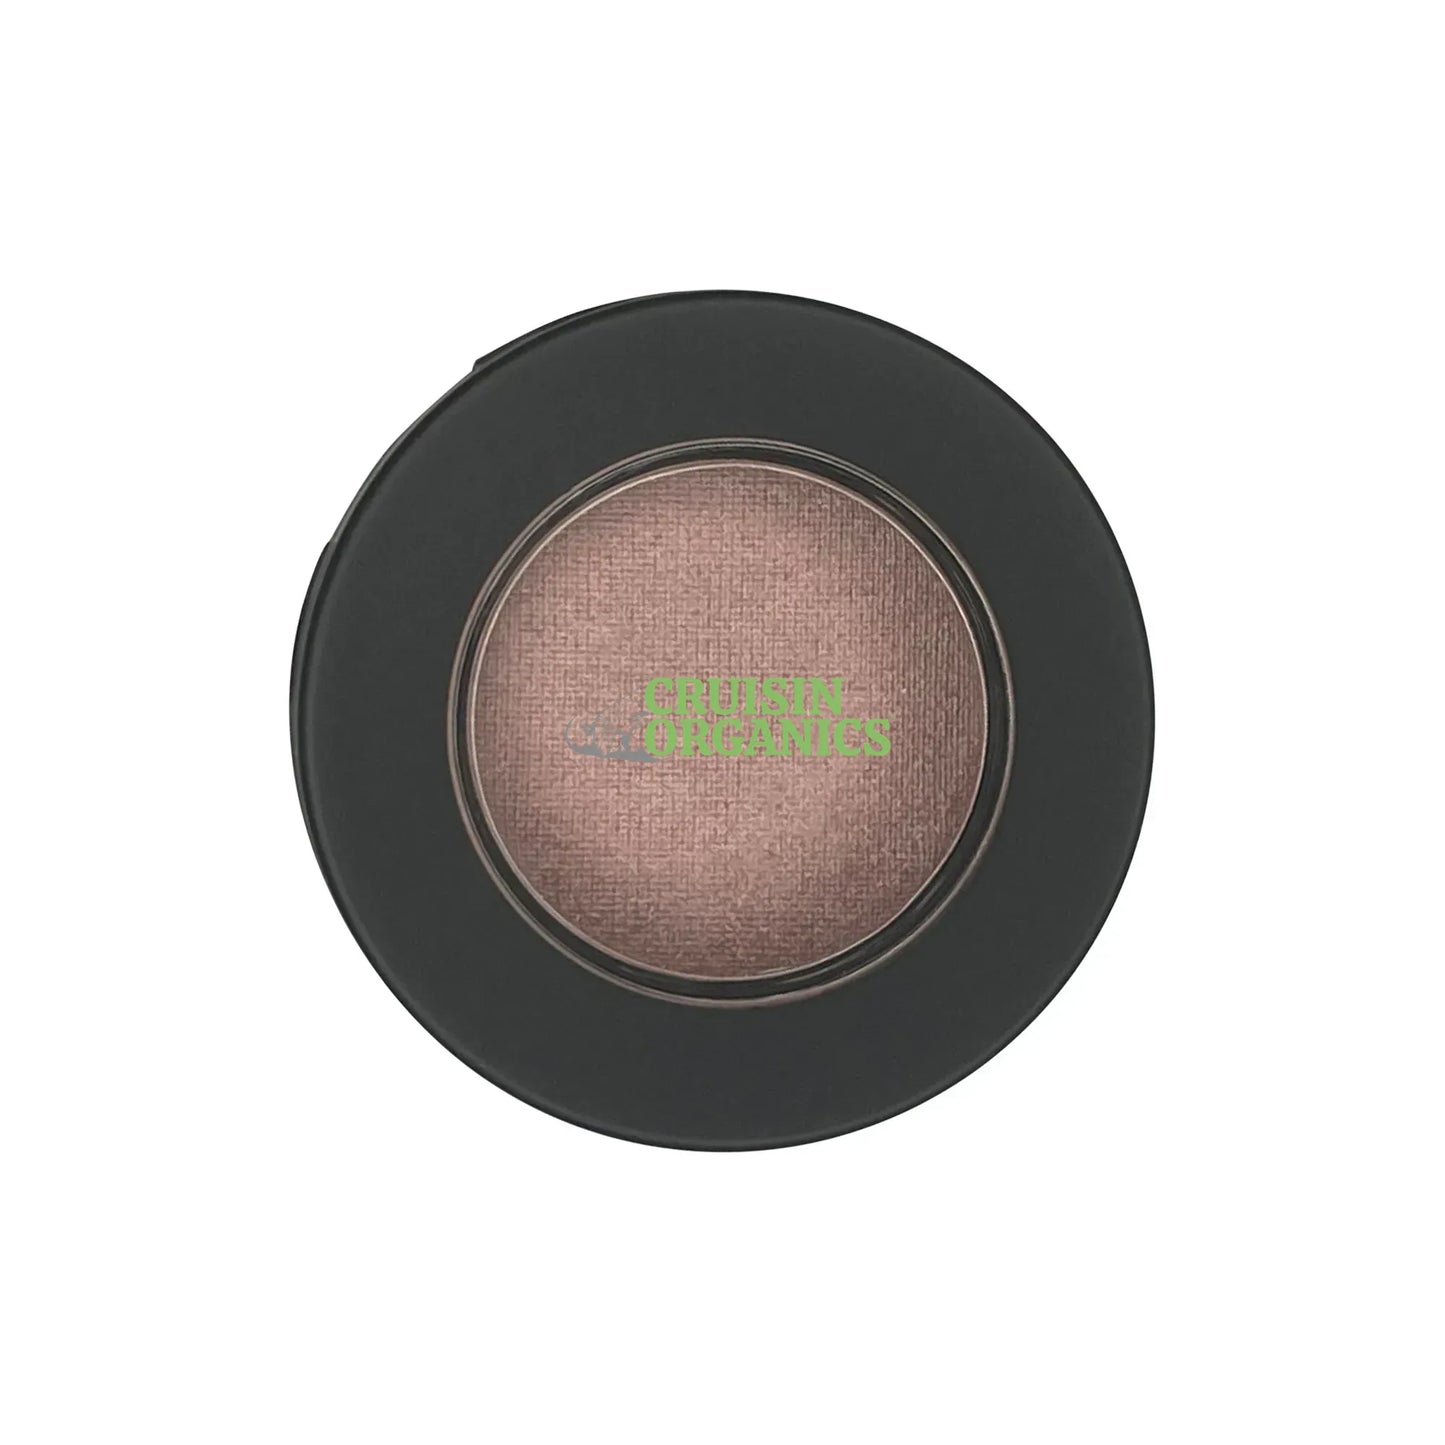 Cruisin Organics Blossom Eyeshadow: SPF shade, triple milled, leader for Powerpuff girls.